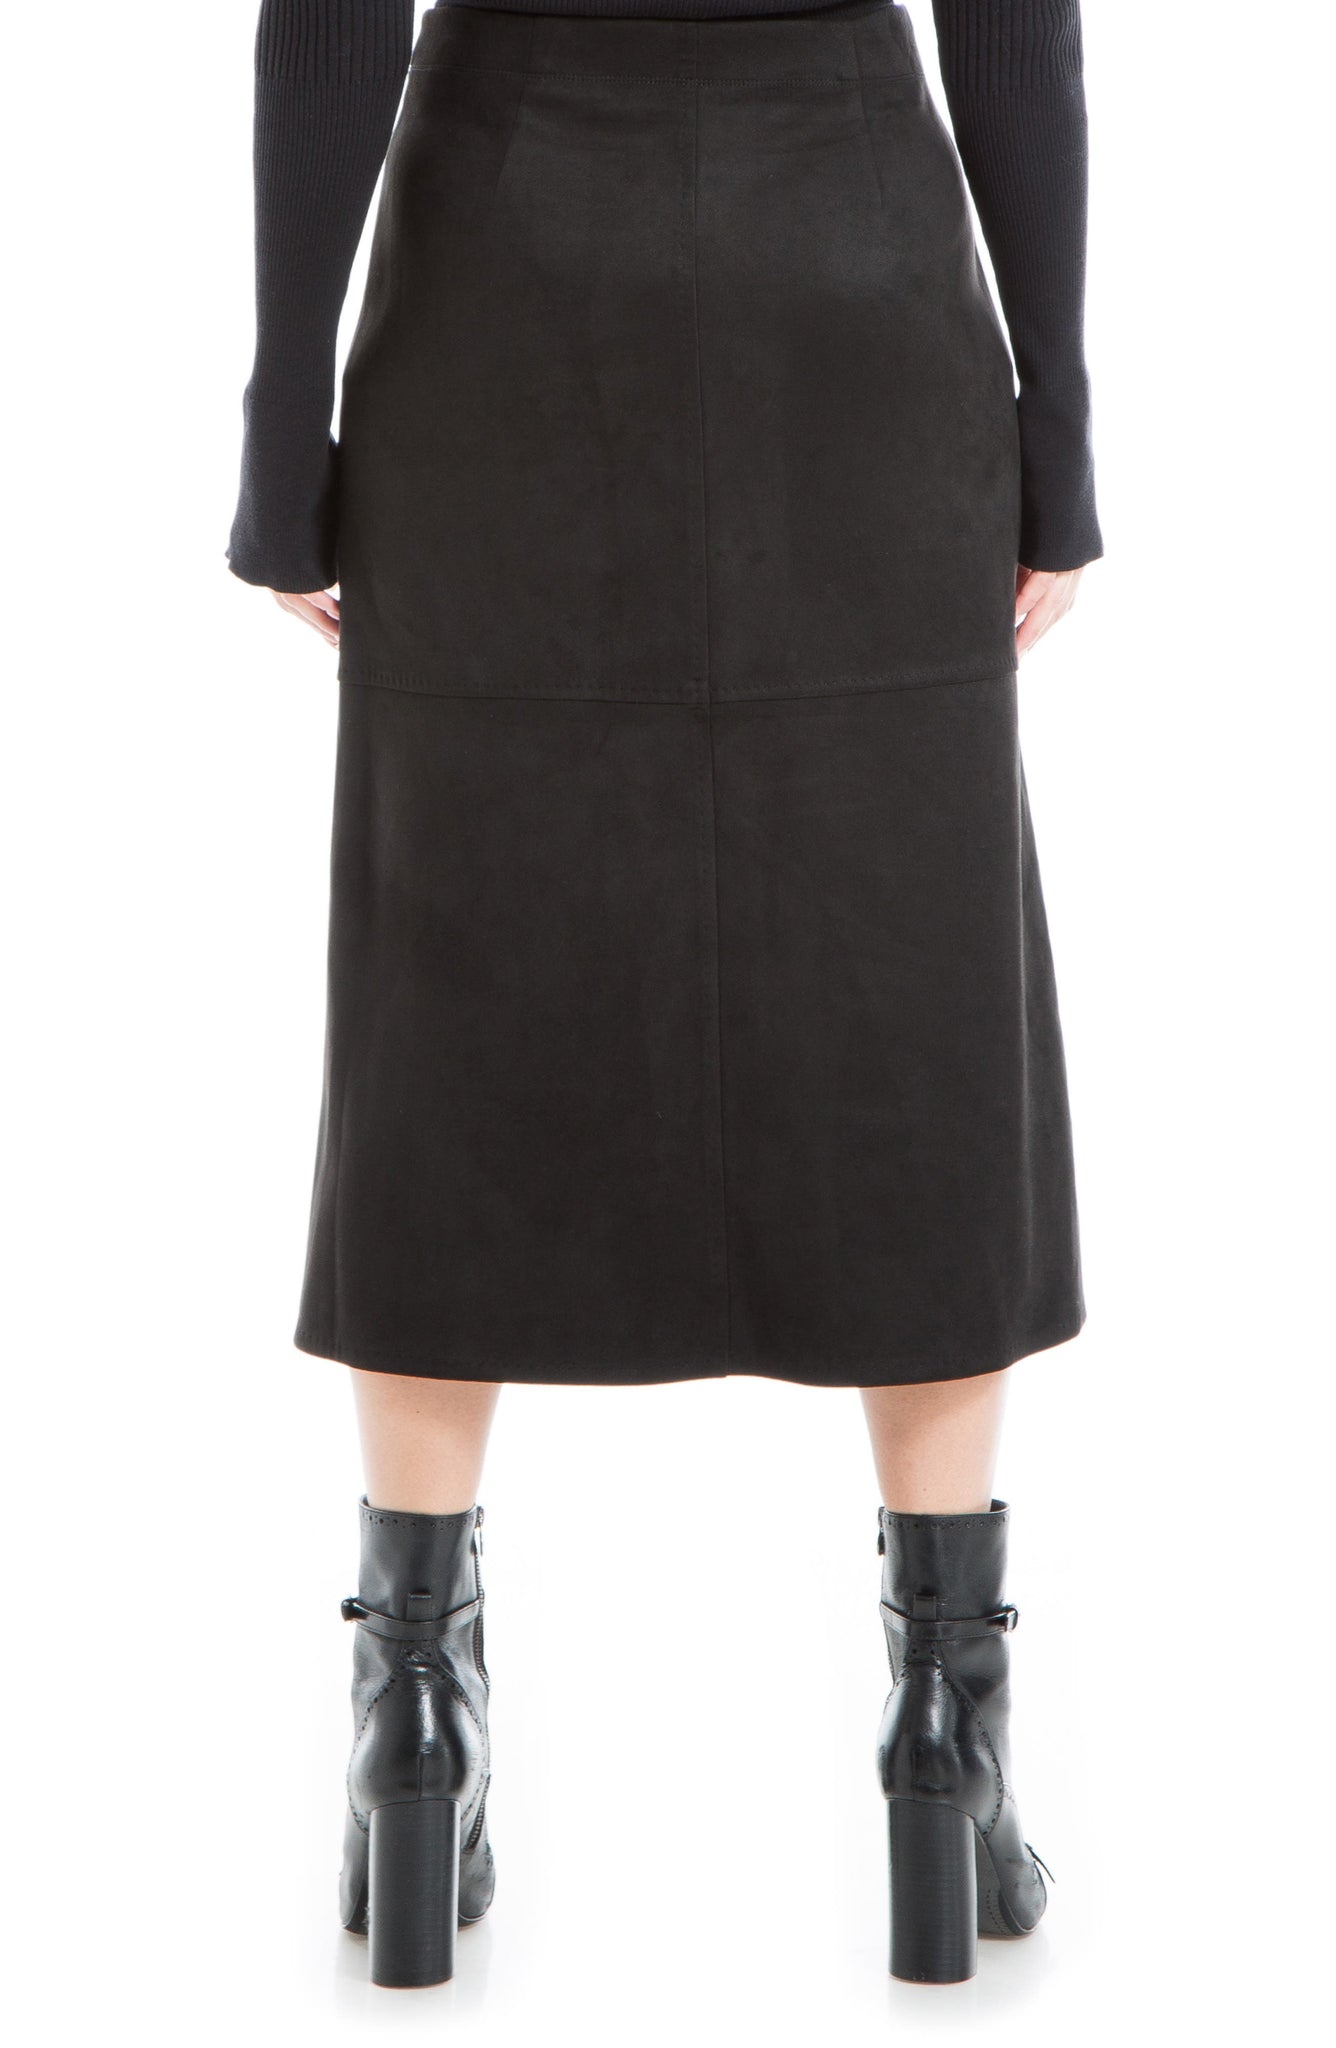 MAXSTUDIO Faux Suede A-Line Midi Skirt, Main, color, BLACK